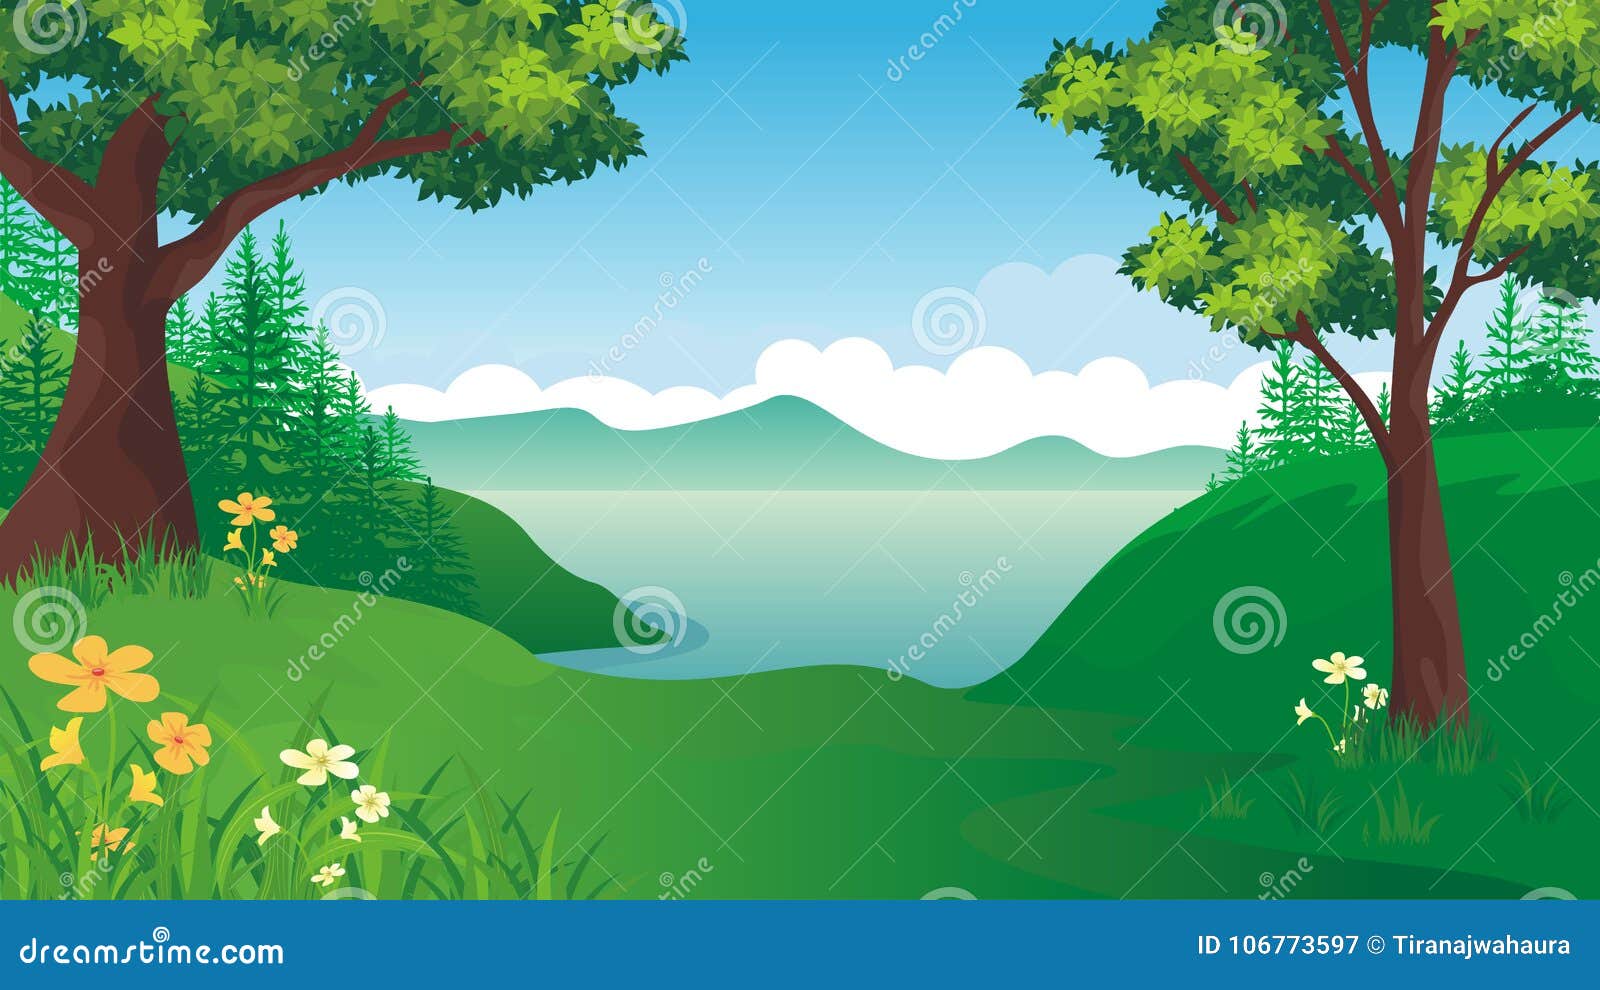 Cartoon Nature Landscape with Beautiful Scene Stock Vector